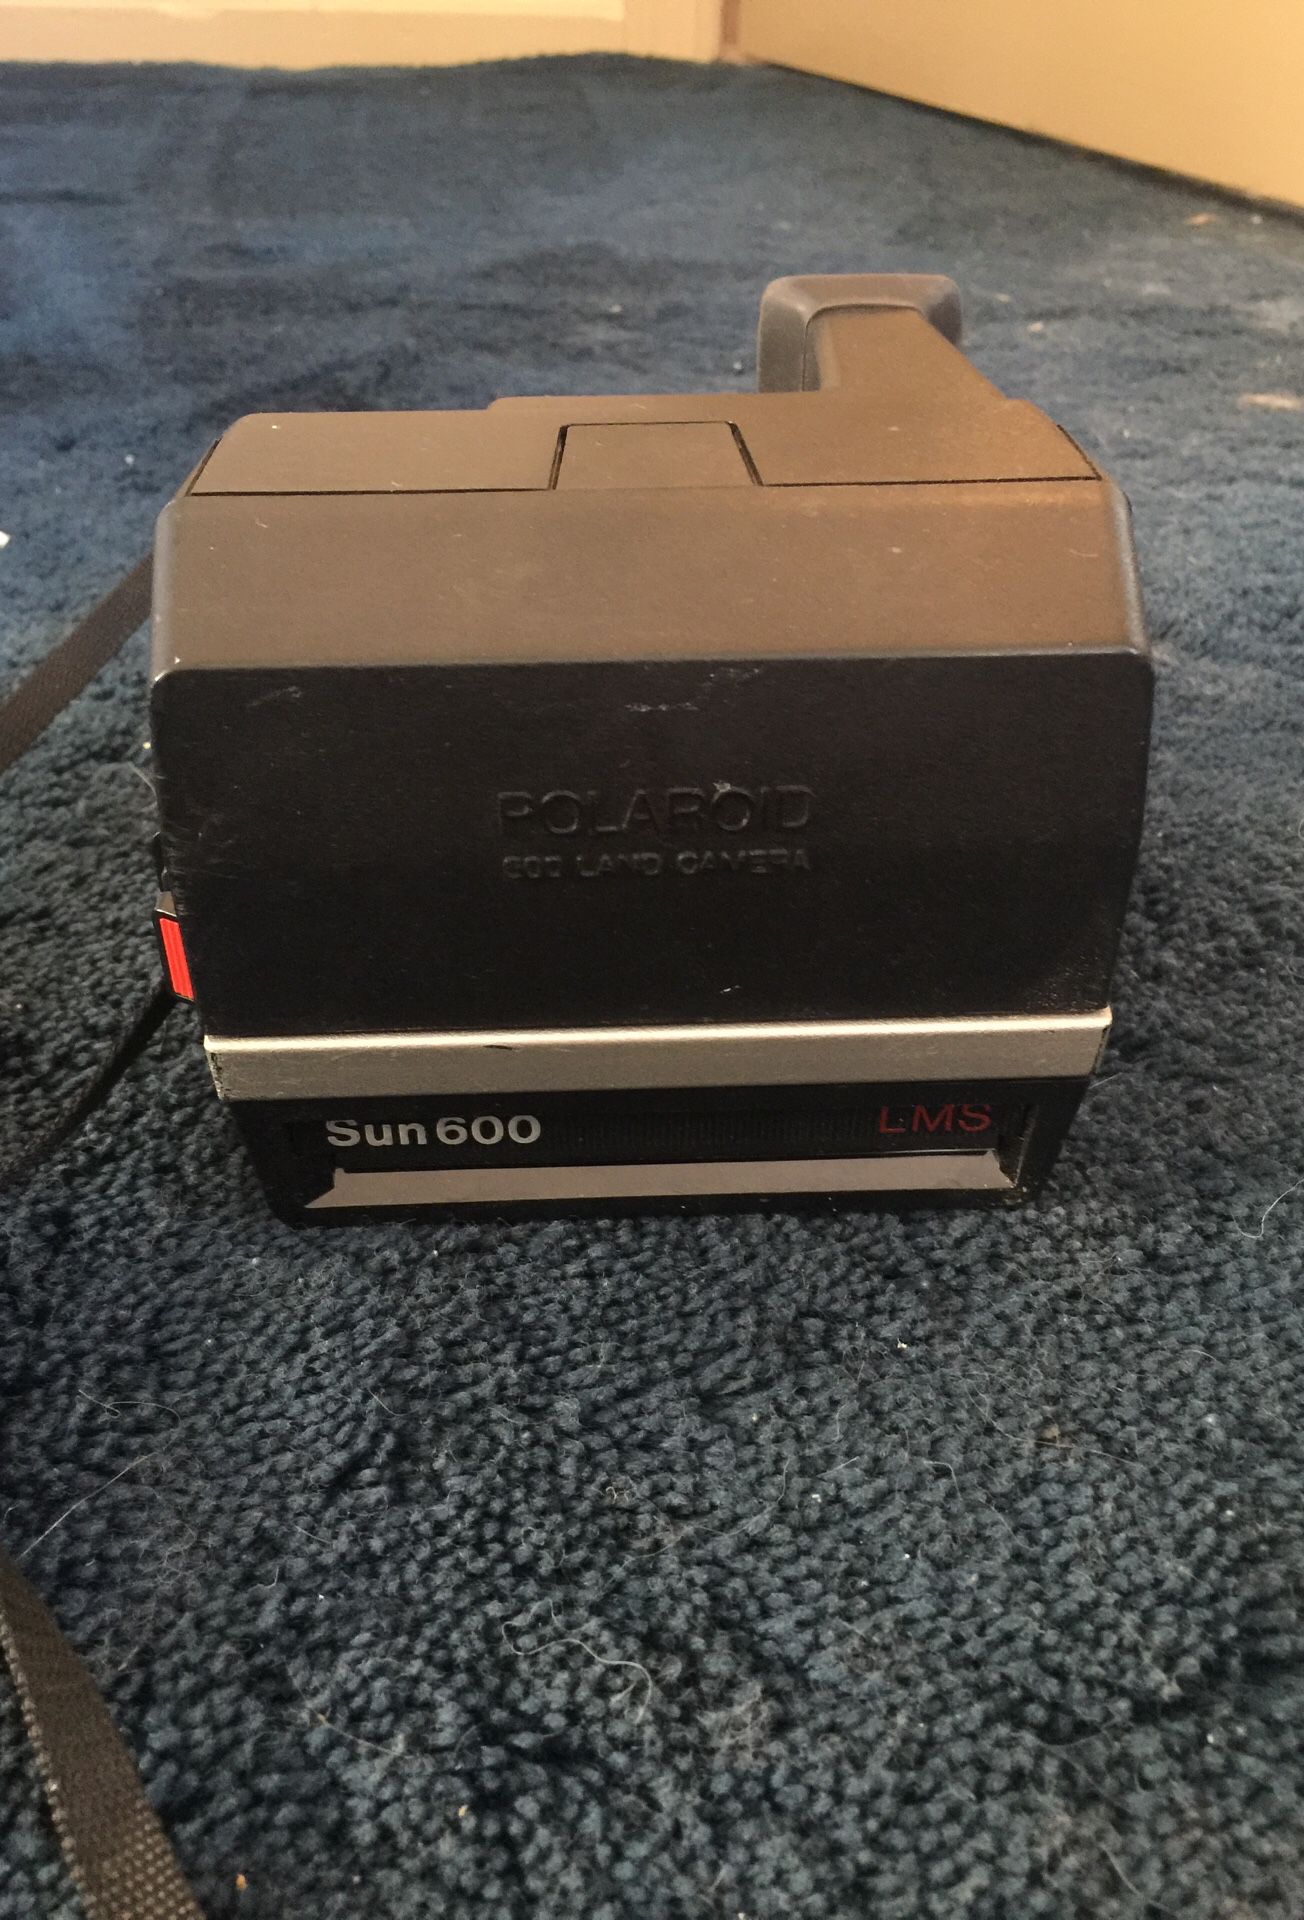 Polaroid sun 600 camera